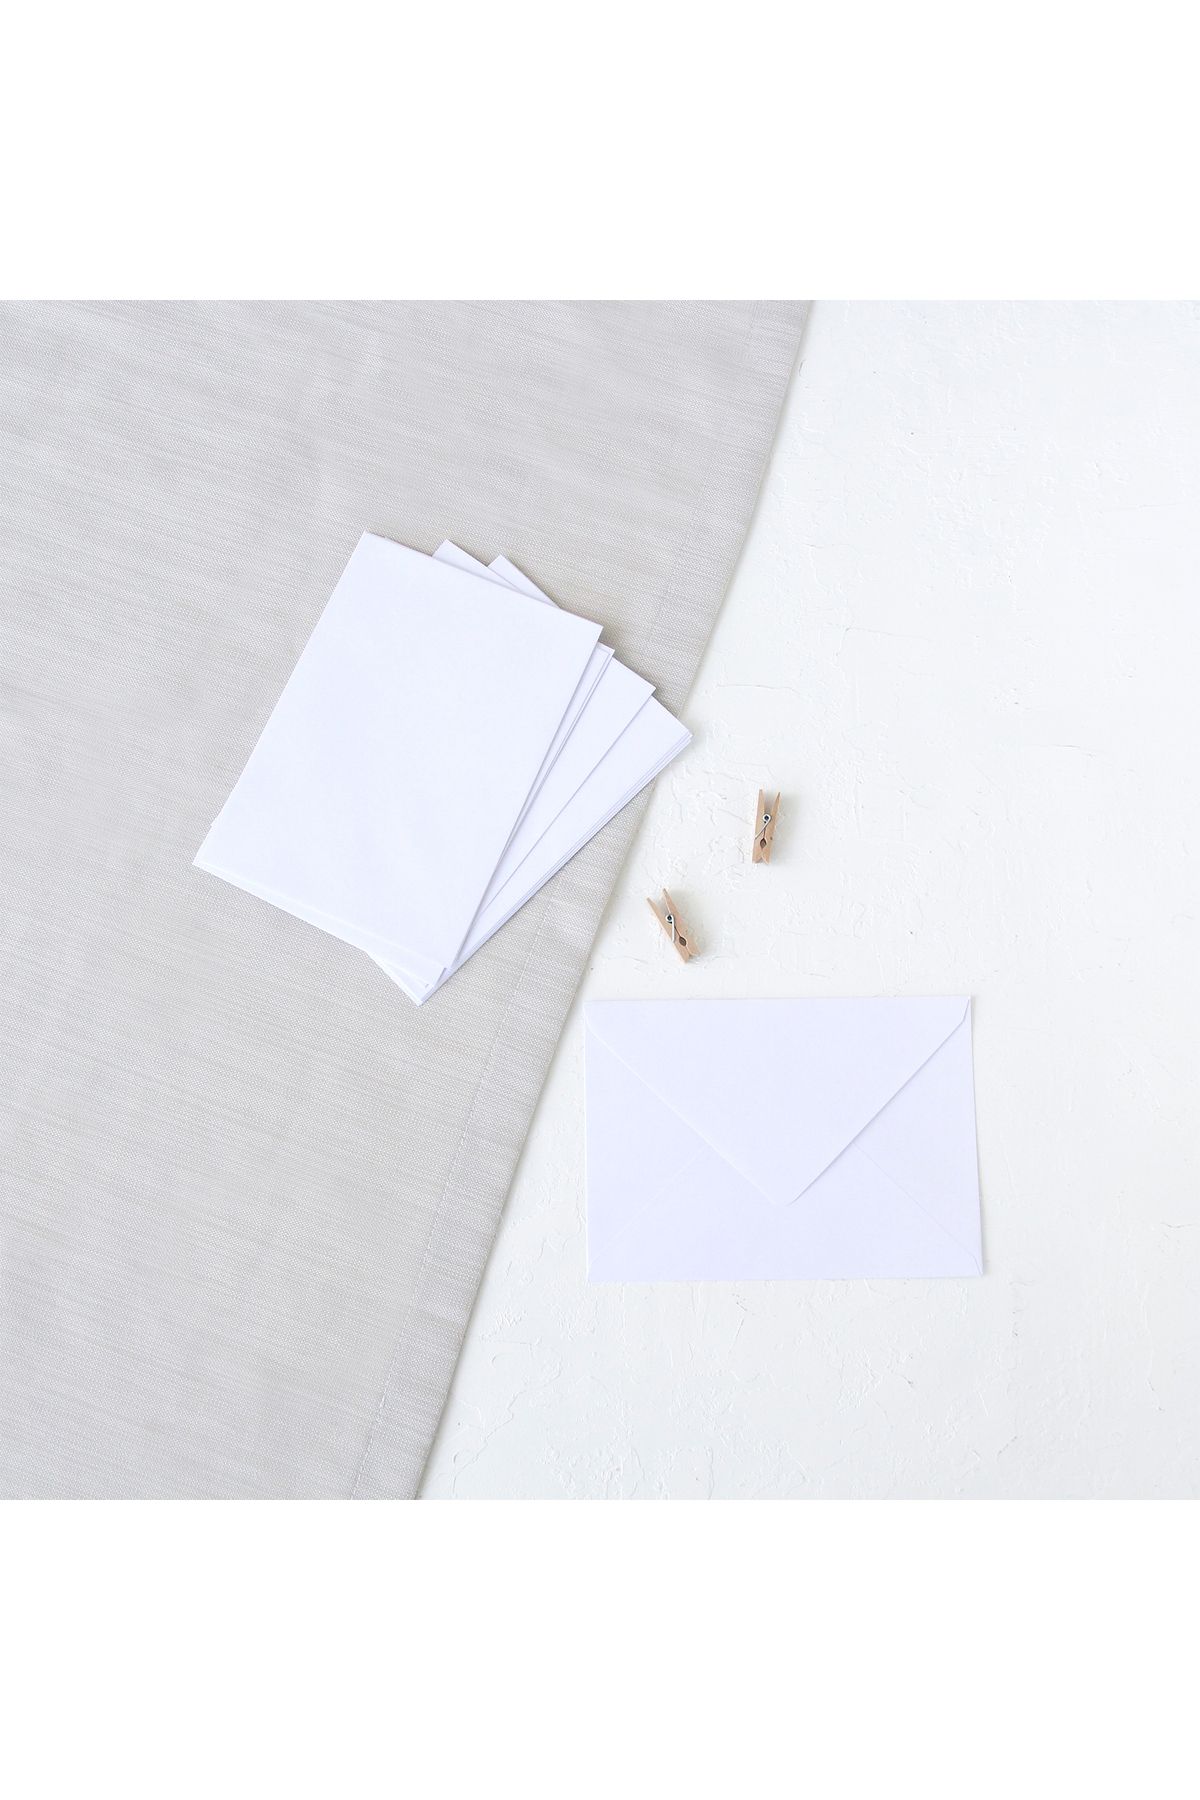 Bimotif Beyaz Standart Zarf, 13x18 Cm 50 Adet